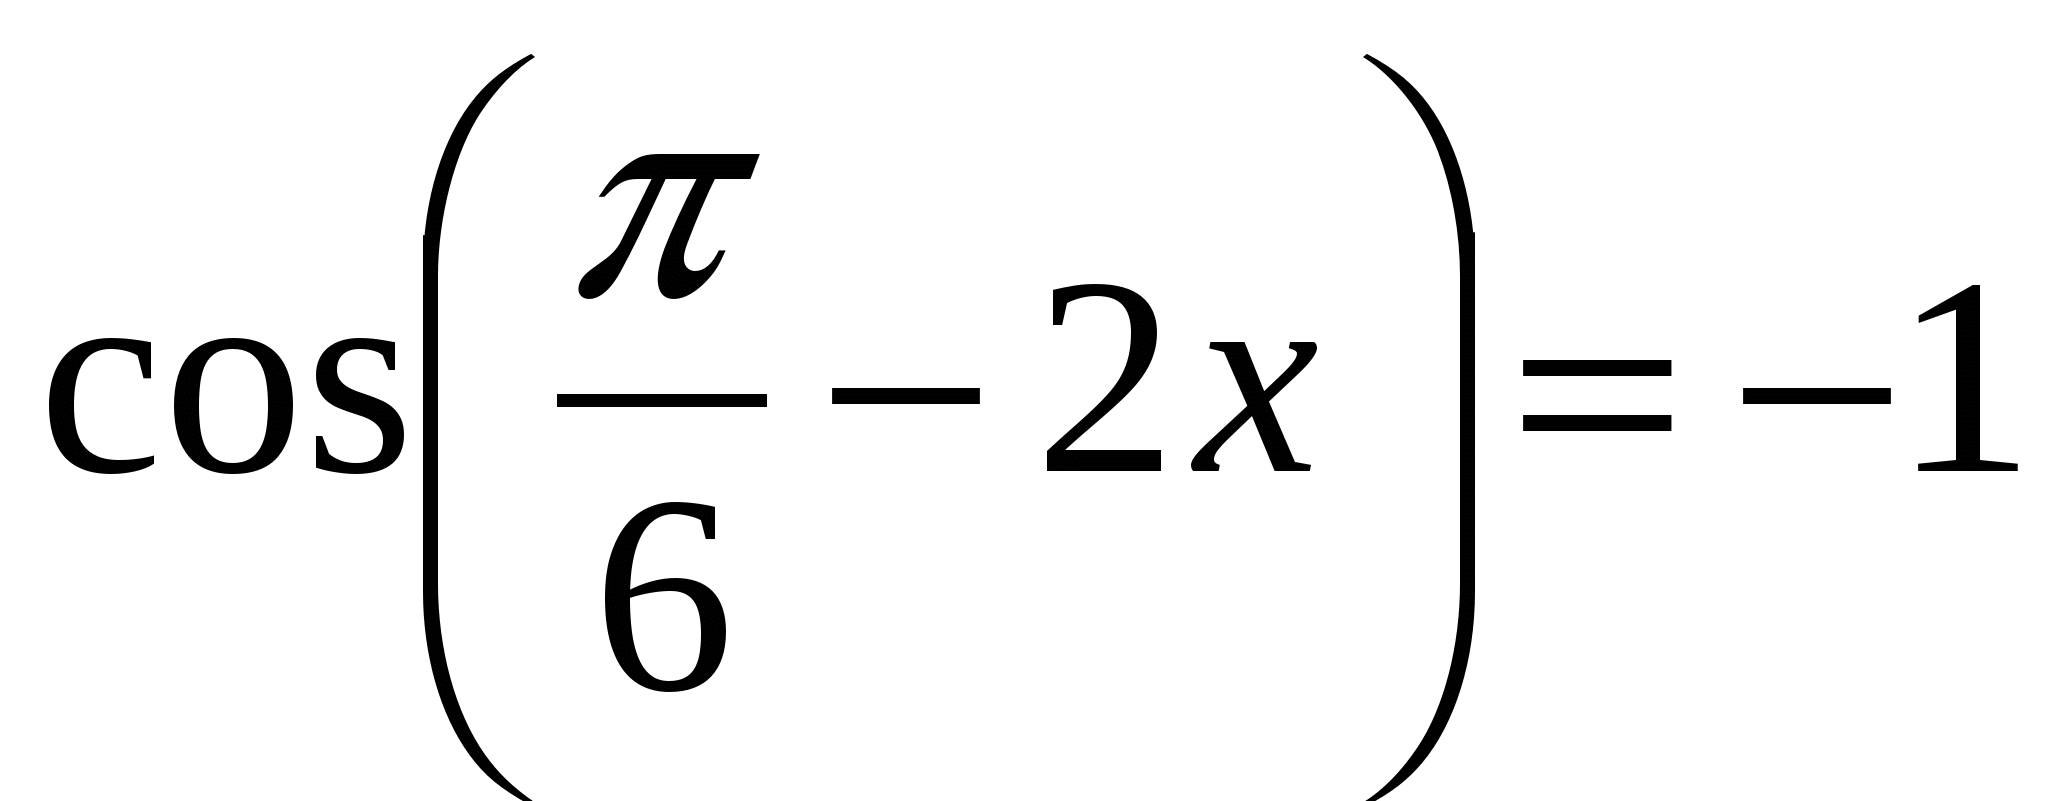 Тест по тригонометрическим уравнениям